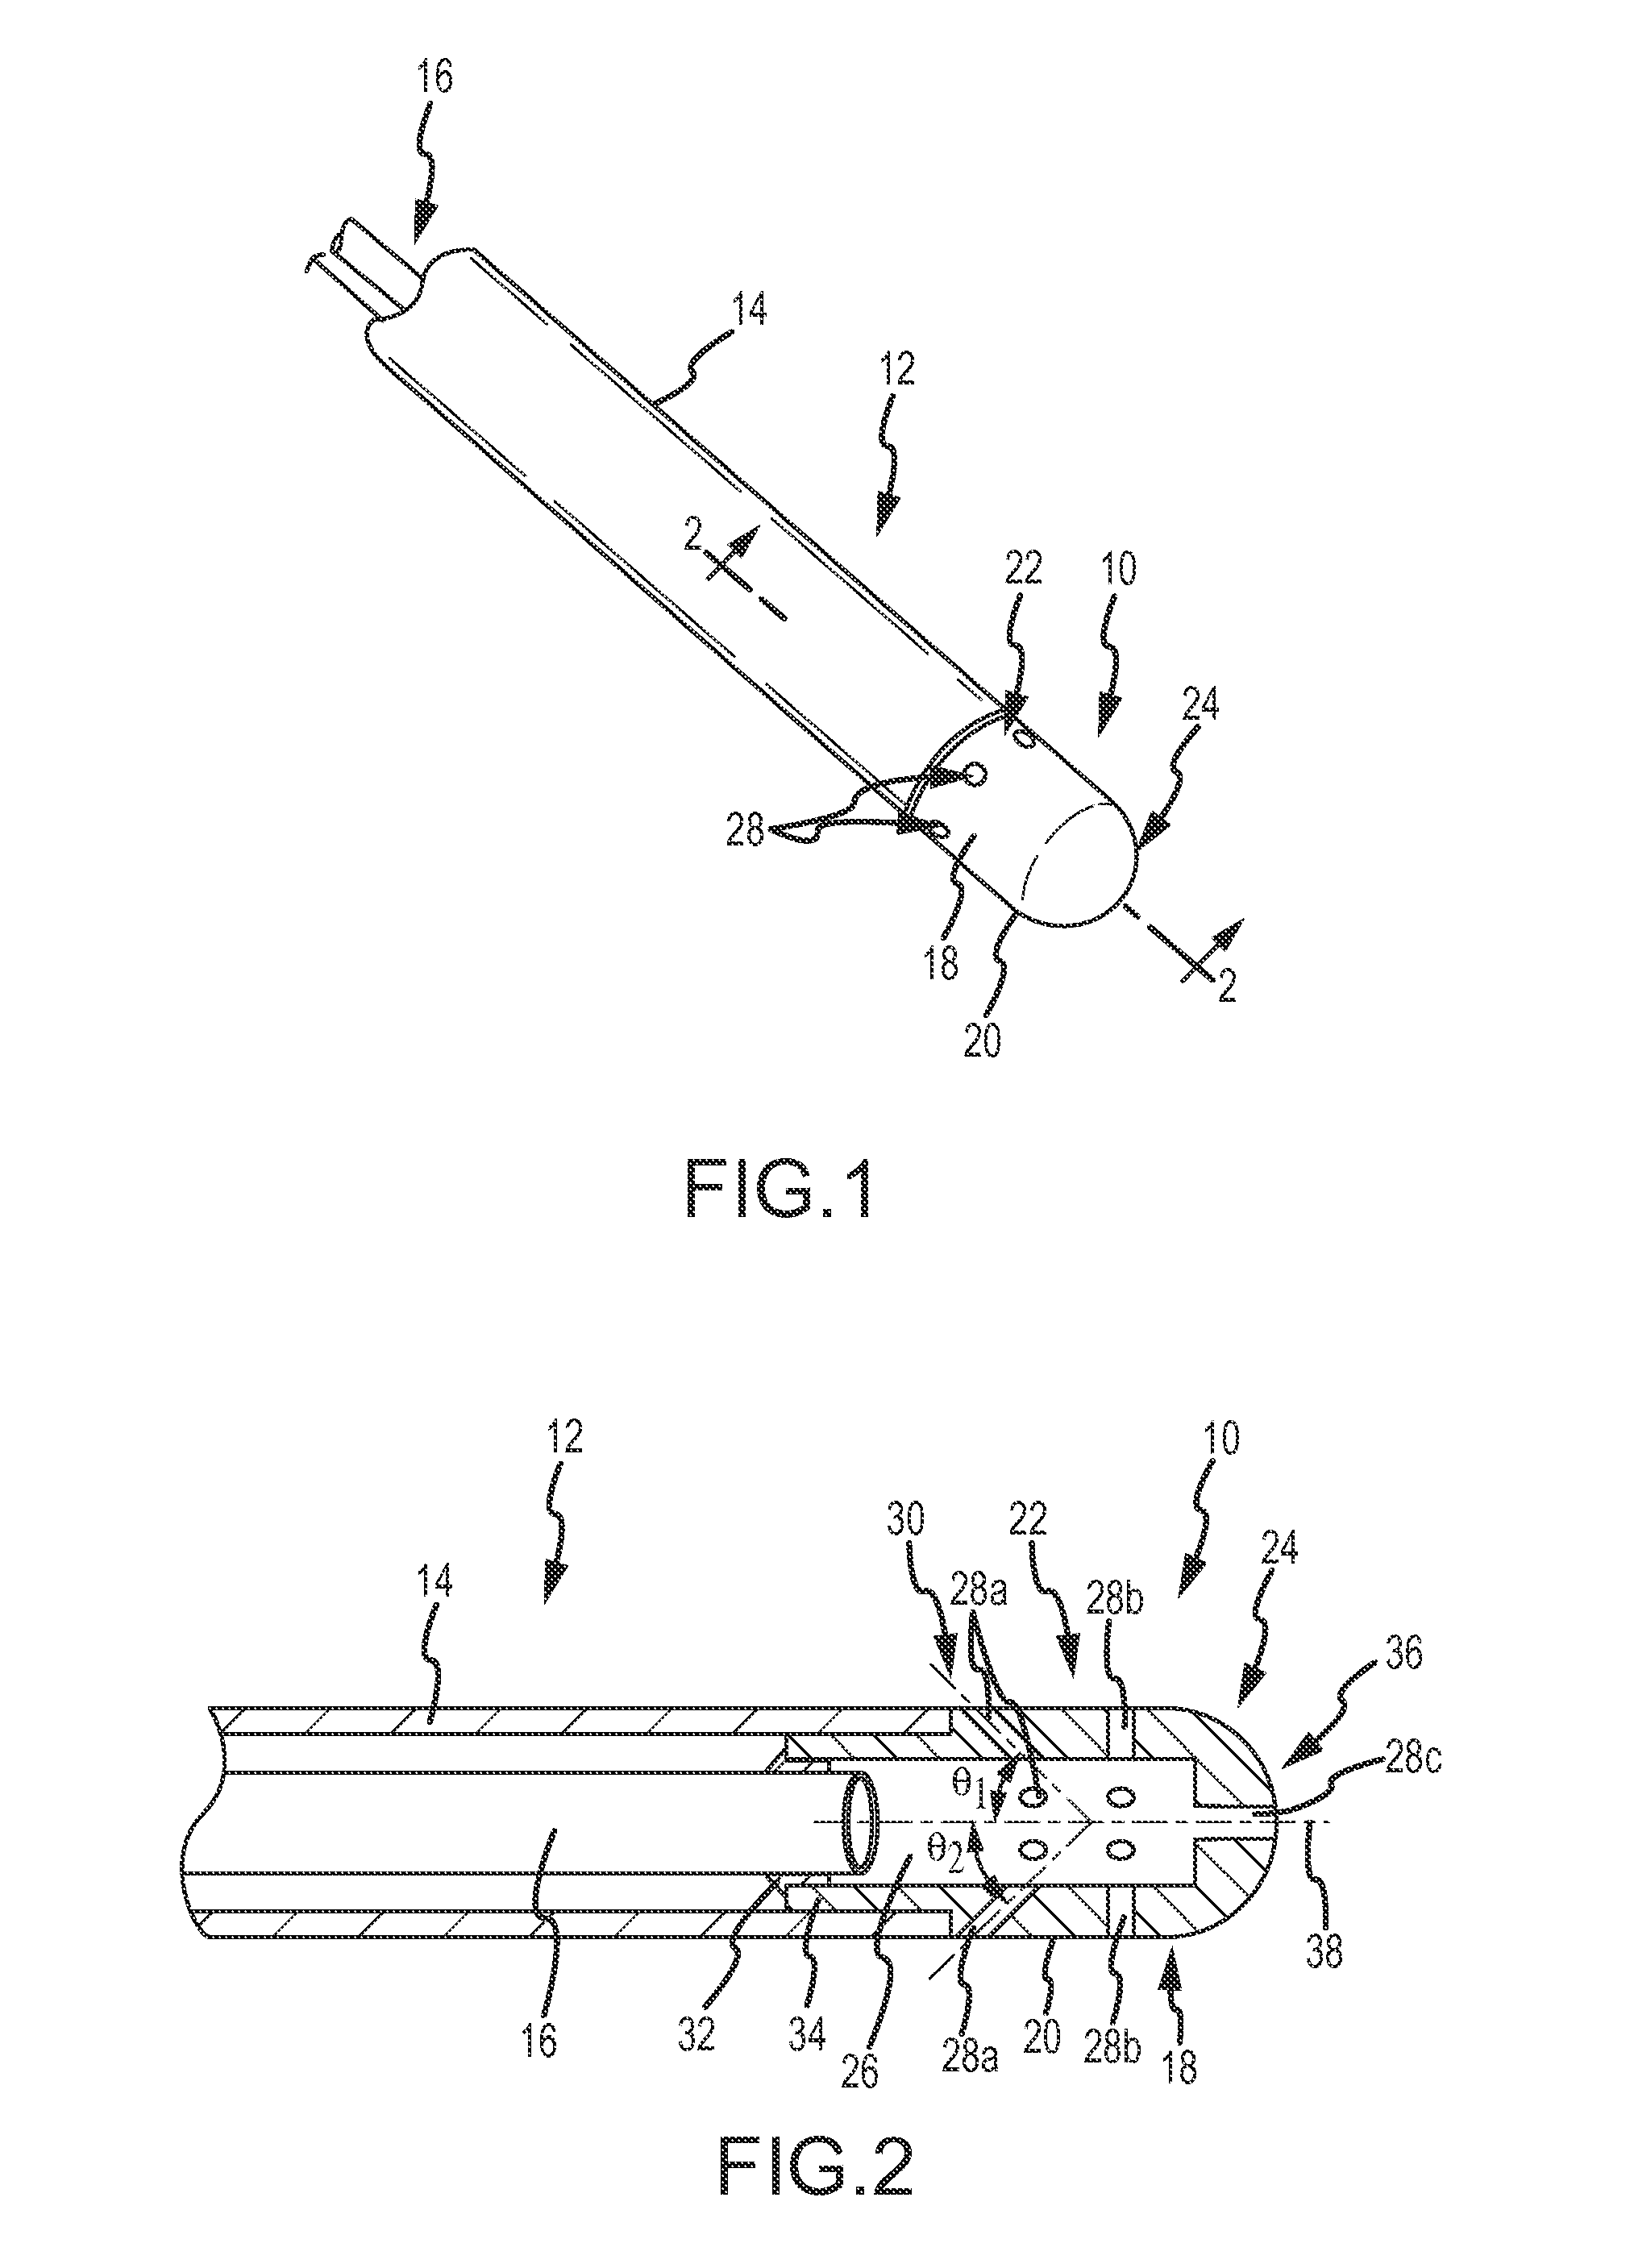 Irrigated ablation electrode having proximal direction flow